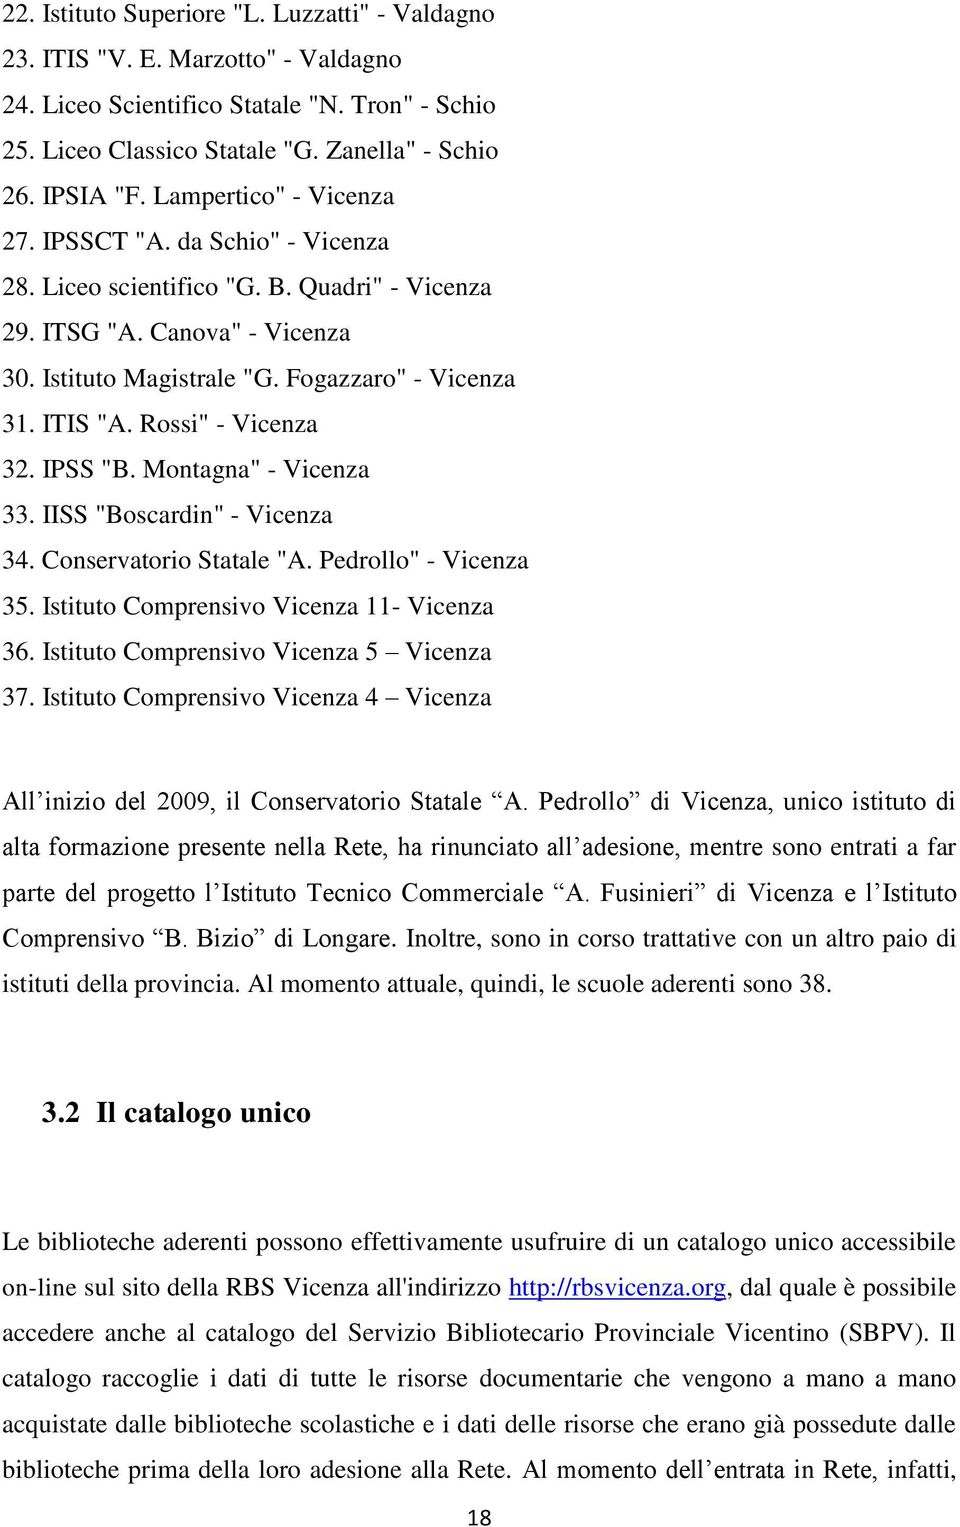 Rossi" - Vicenza 32. IPSS "B. Montagna" - Vicenza 33. IISS "Boscardin" - Vicenza 34. Conservatorio Statale "A. Pedrollo" - Vicenza 35. Istituto Comprensivo Vicenza 11- Vicenza 36.